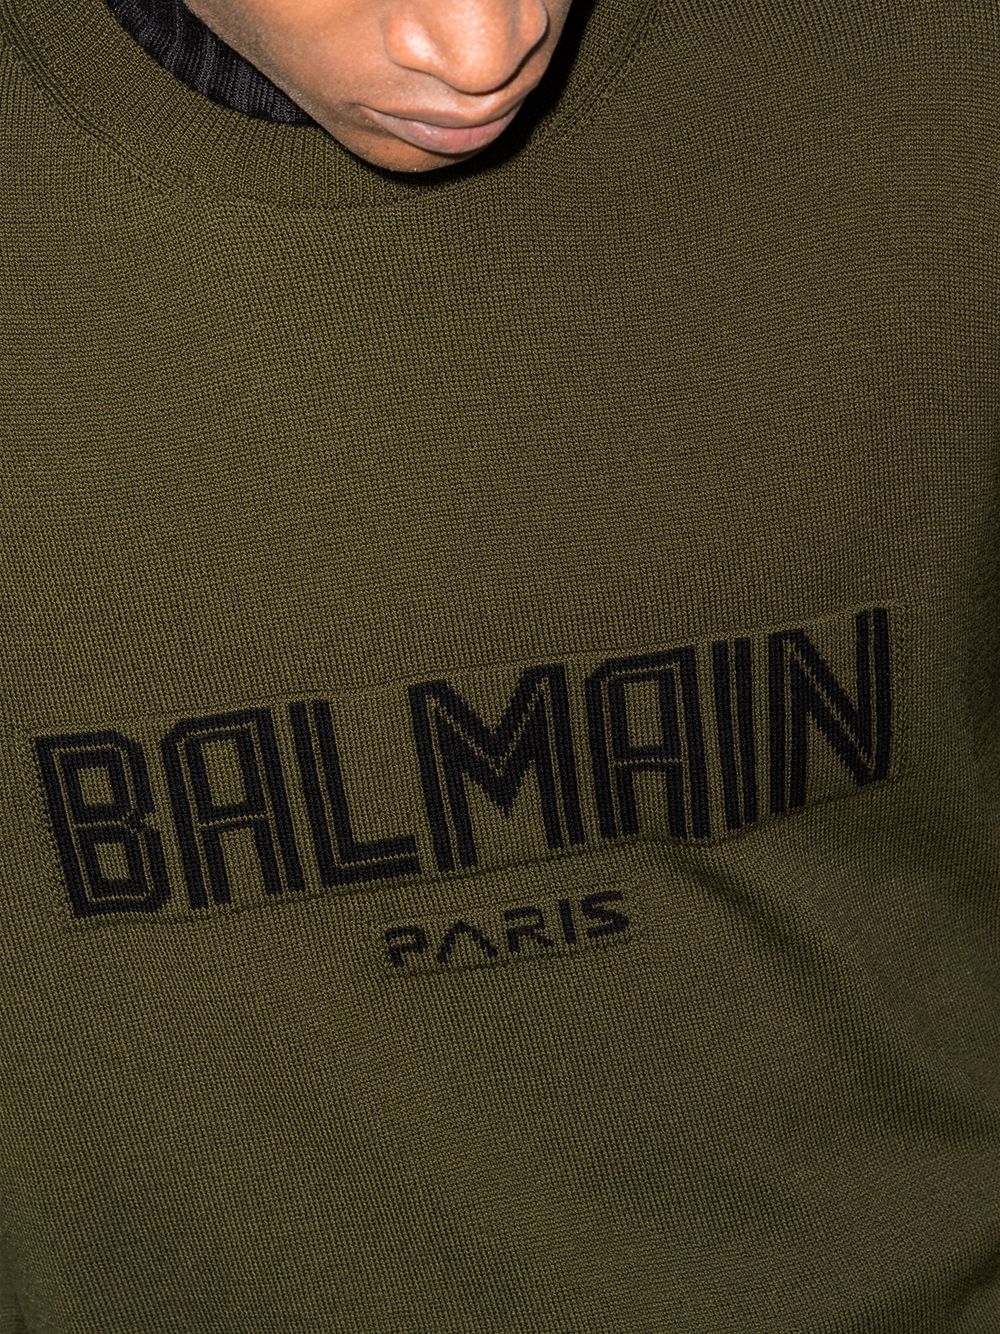 фото Balmain джемпер вязки интарсия с логотипом